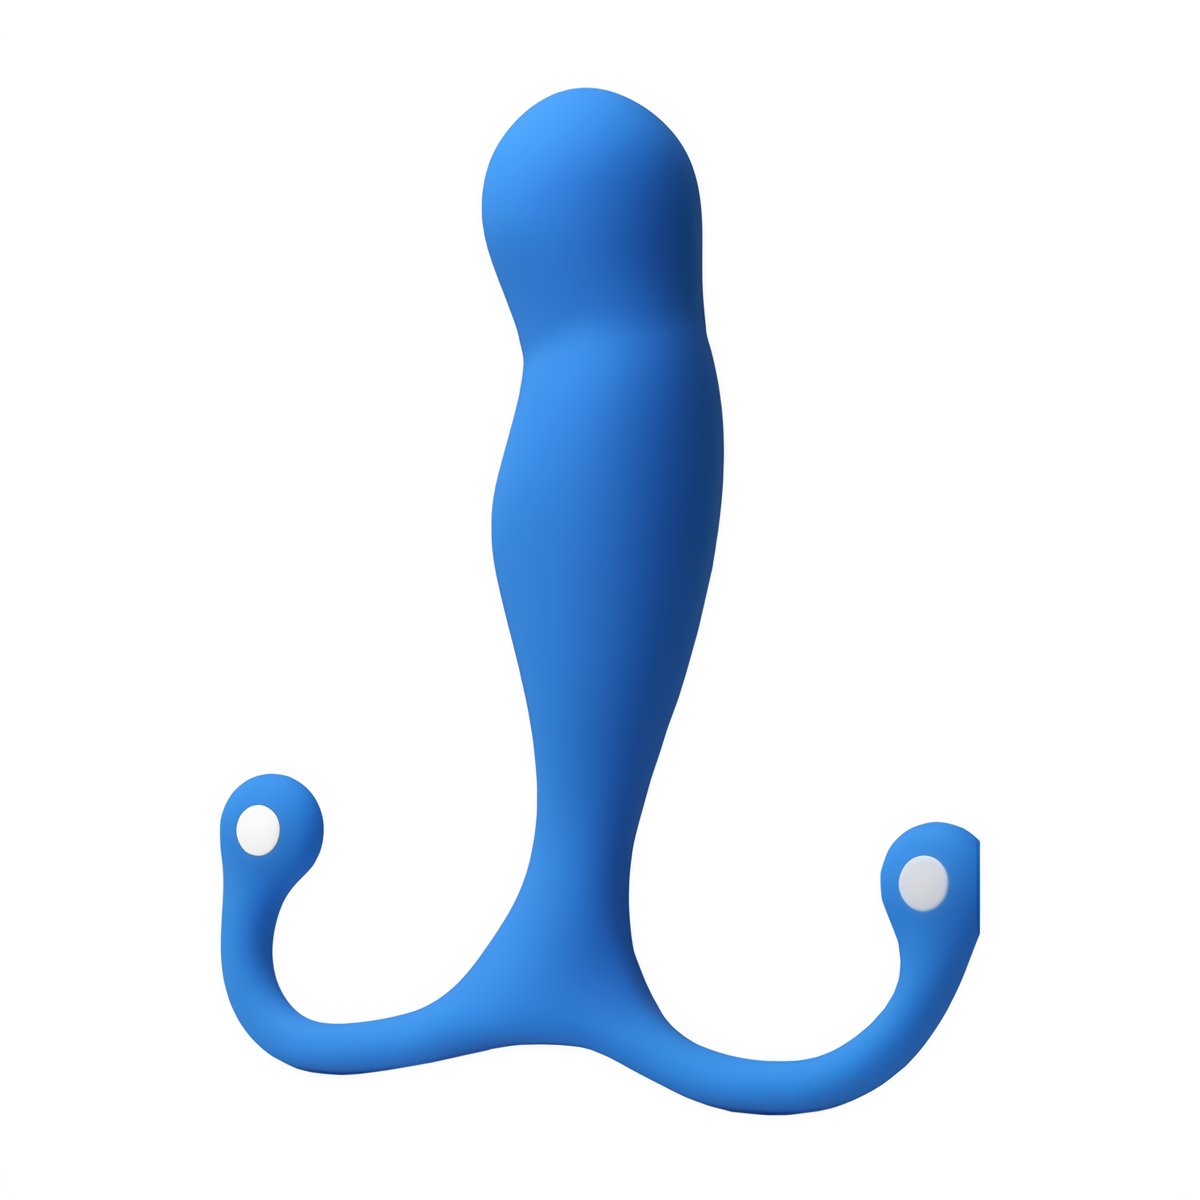 Maximus Syn Trident - Blue - EroticToyzProducten,Toys,Anaal Toys,Prostaatstimulatoren,,MannelijkAneros